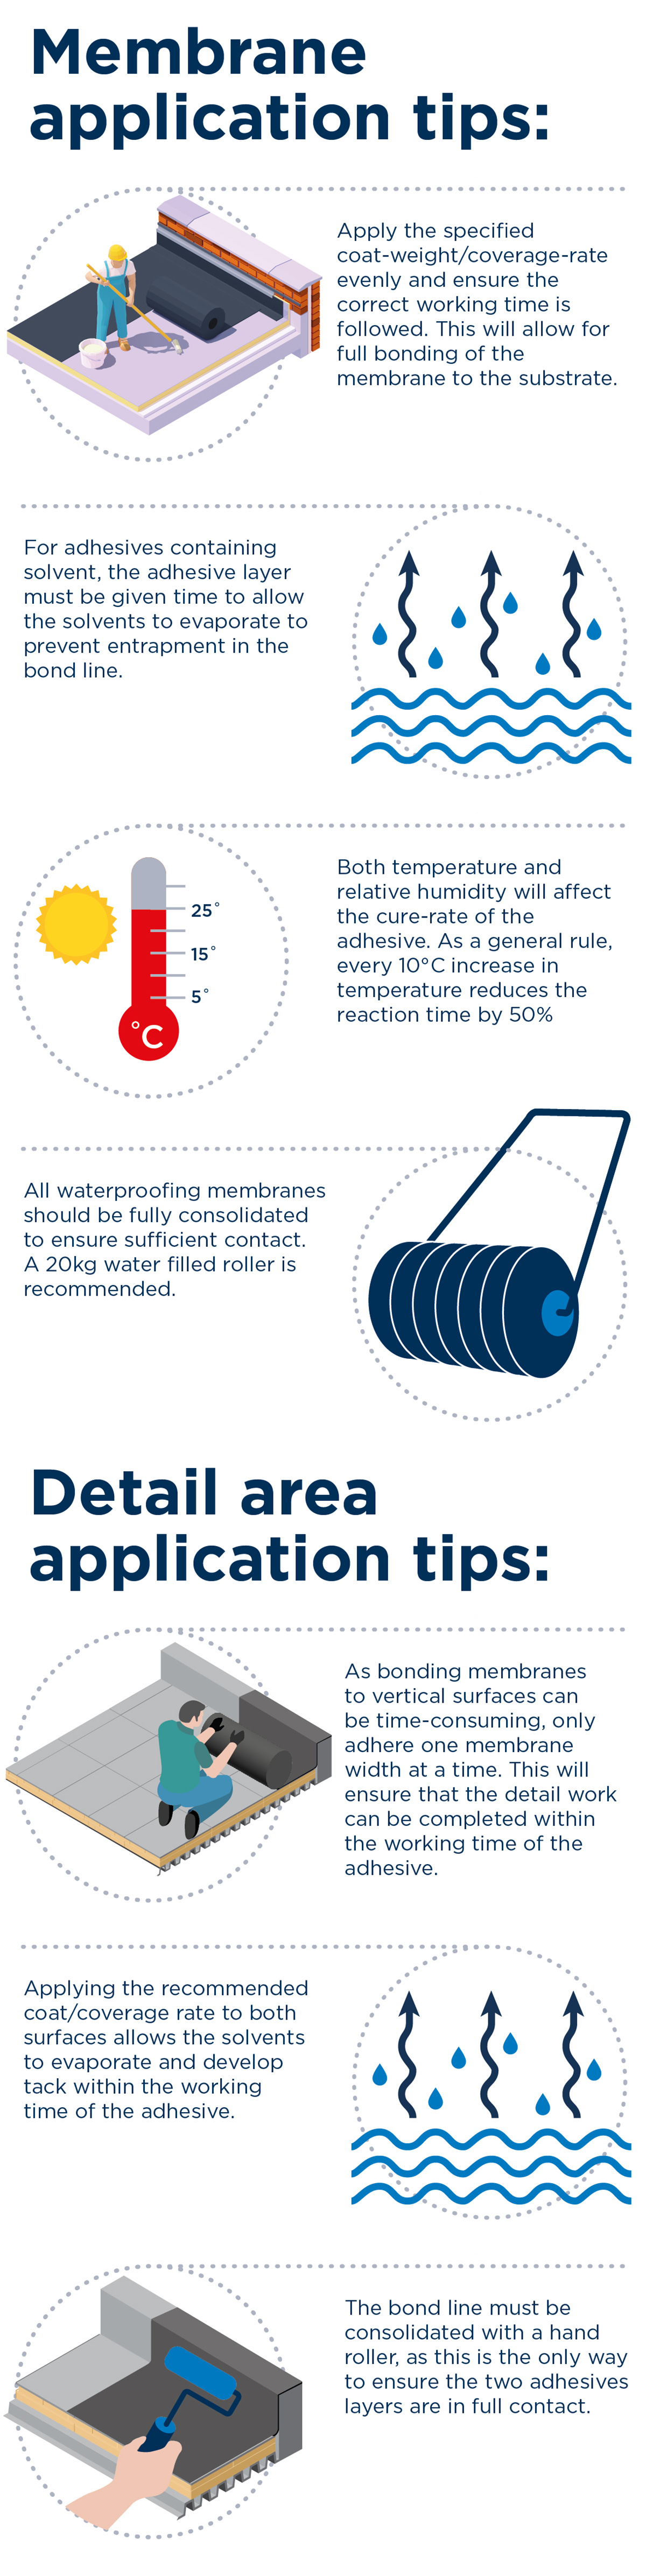 Membrane Application infographic